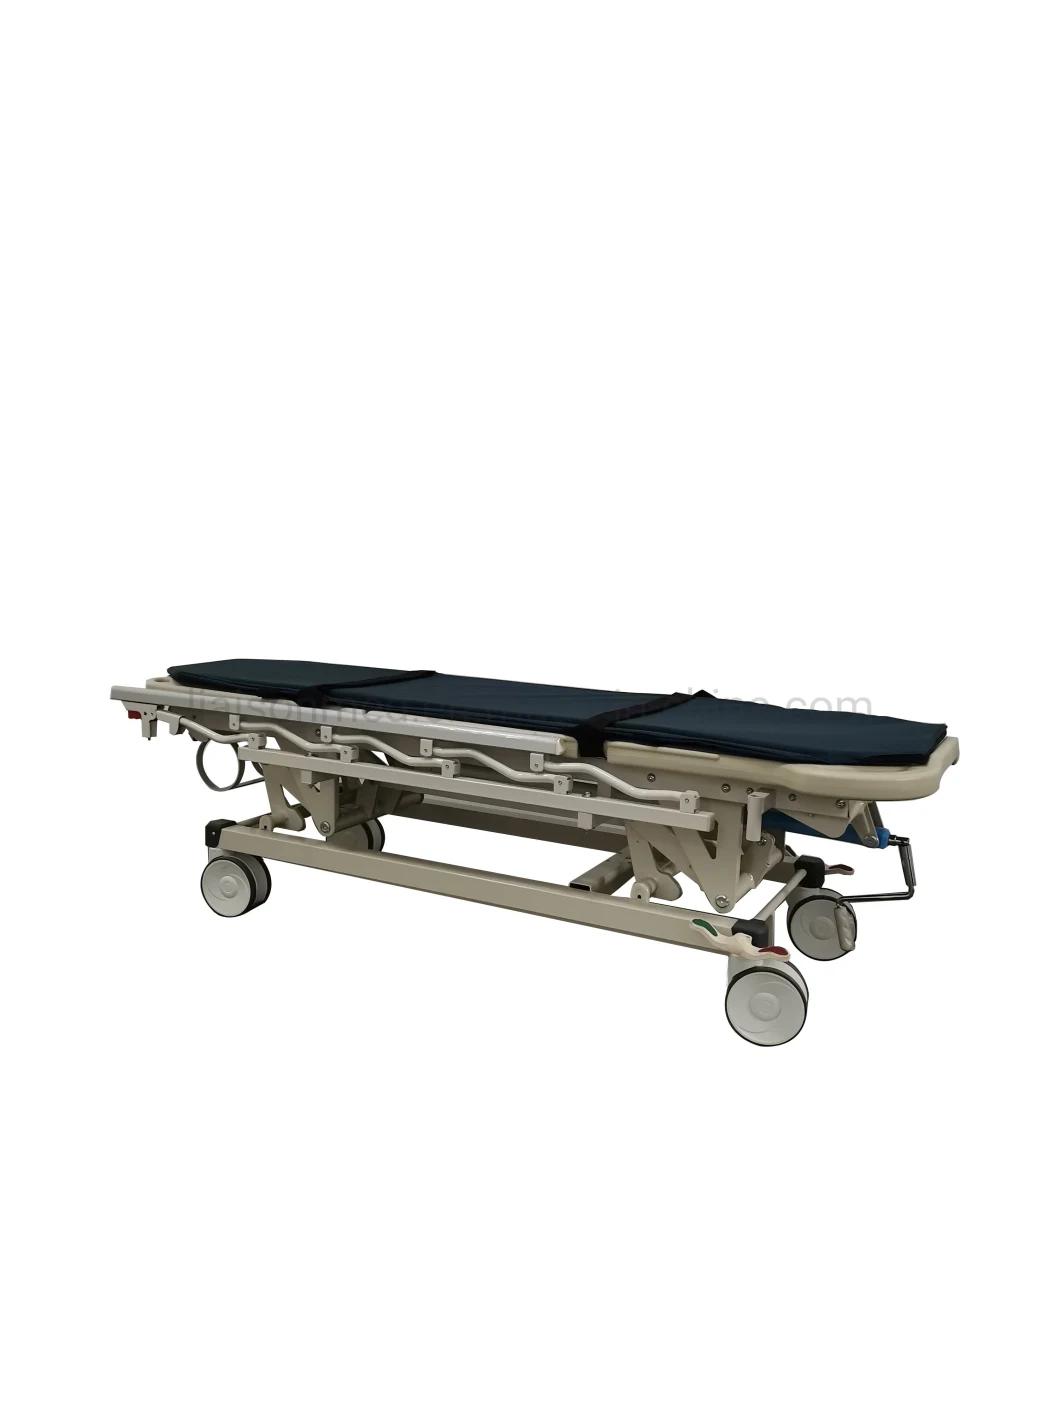 Mn-SD006 CE&ISO Medical Hospital Adjustable Aluminum Alloy Emergency Ambulance Stretcher